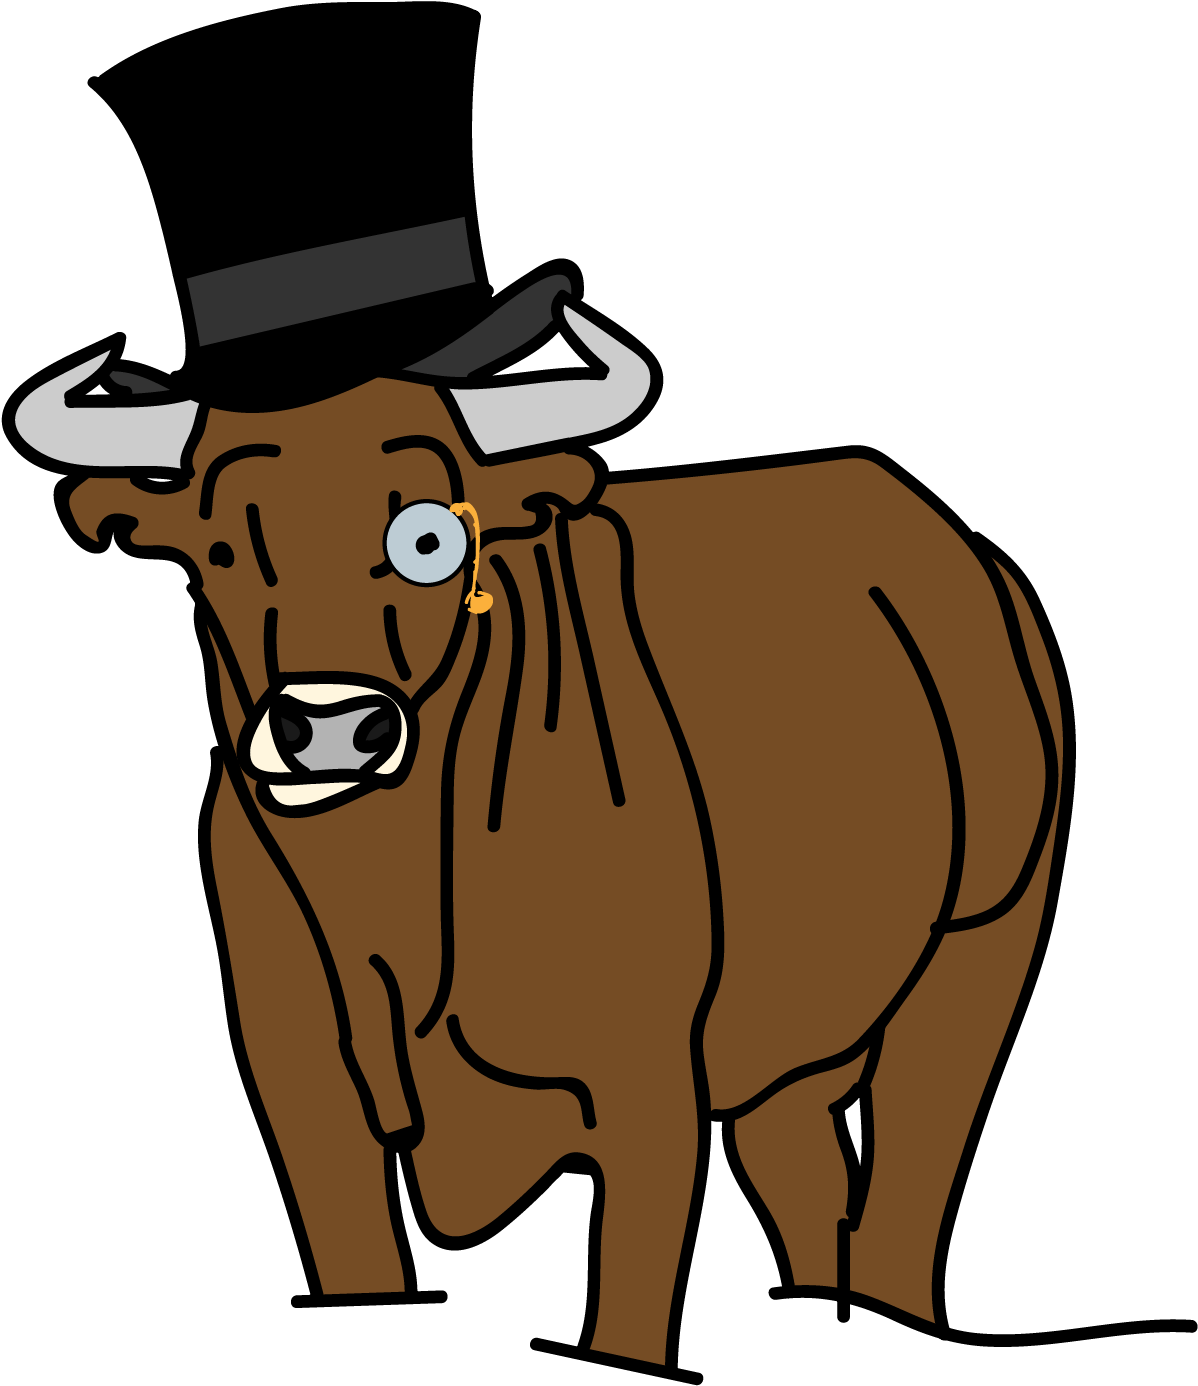 Gentleman Cow - Portable Network Graphics (1448x1531)